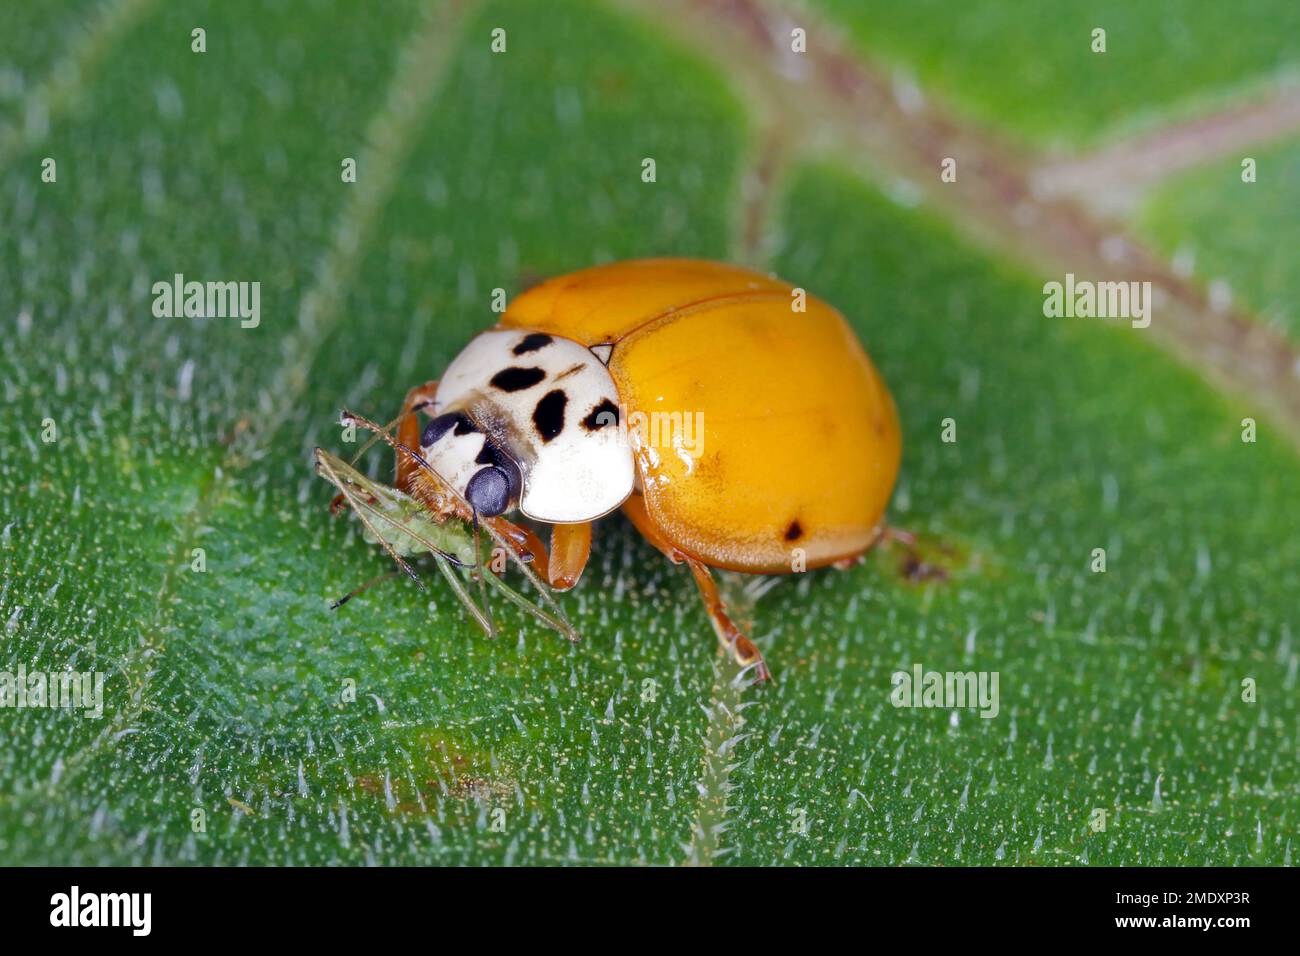 Harmonia axyridis Harlequin ladybug mangiare un apido cacciato. Foto Stock